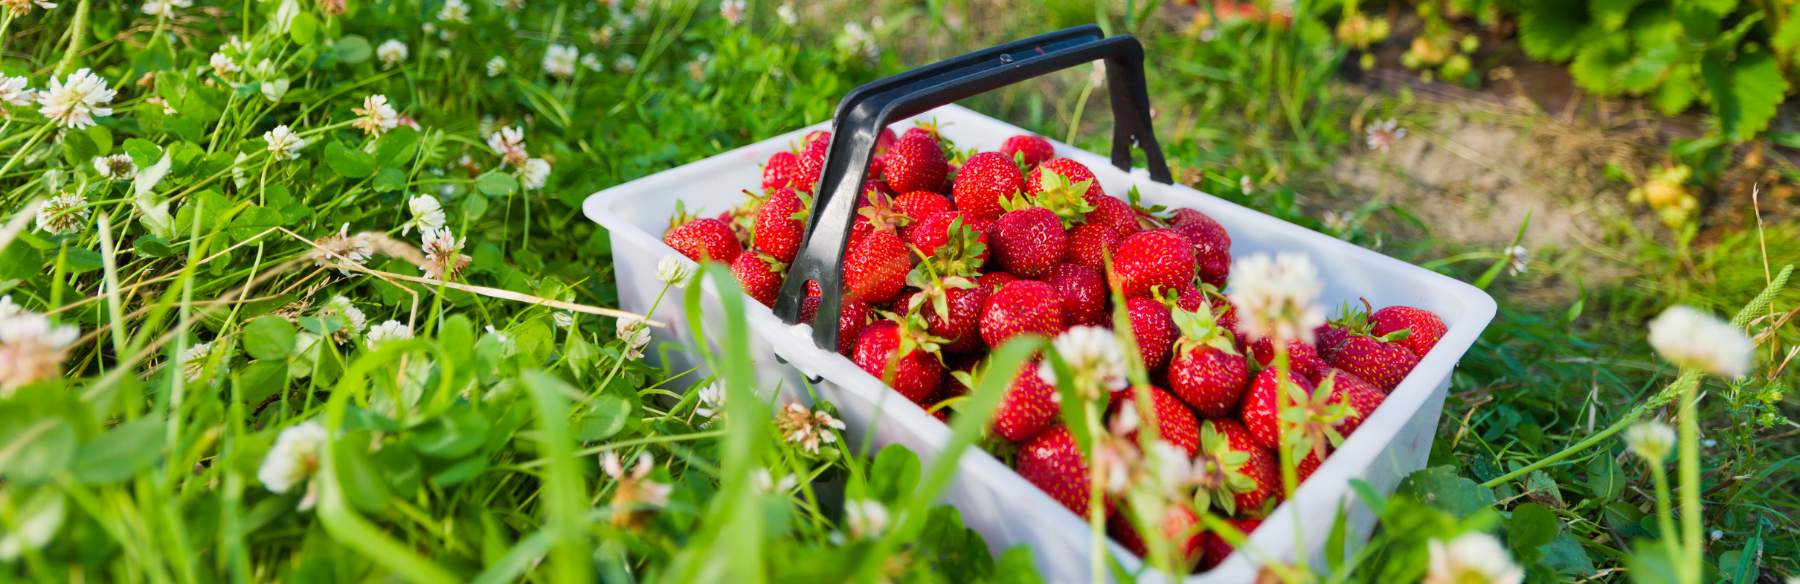 Basket of strawberries in field